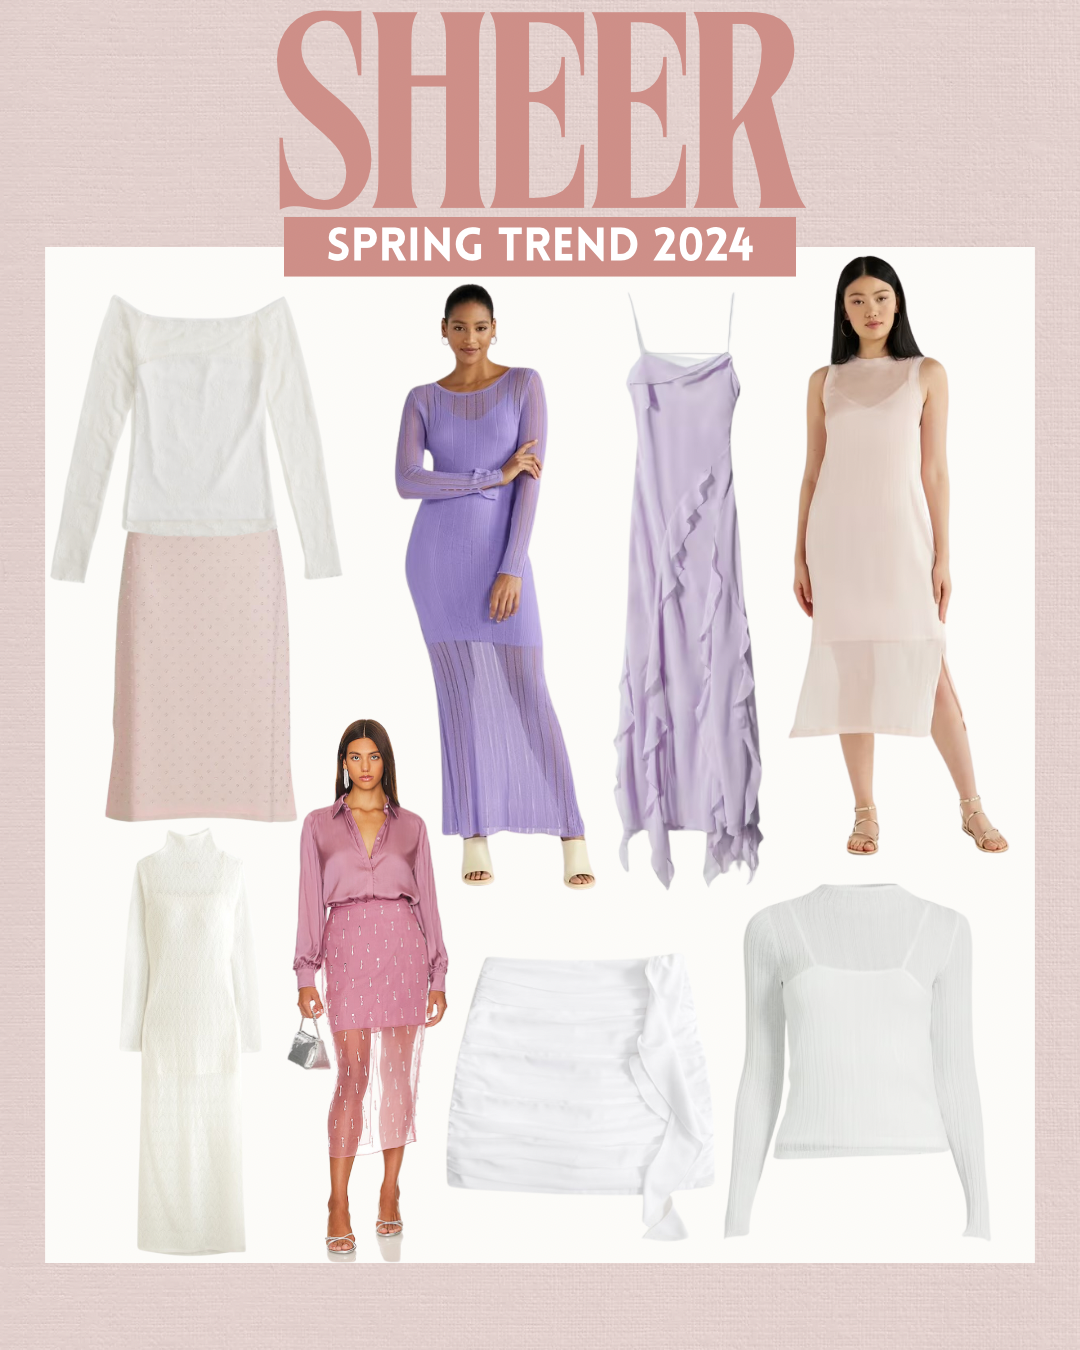 Spring 2024 Fashion Trend: Sheer